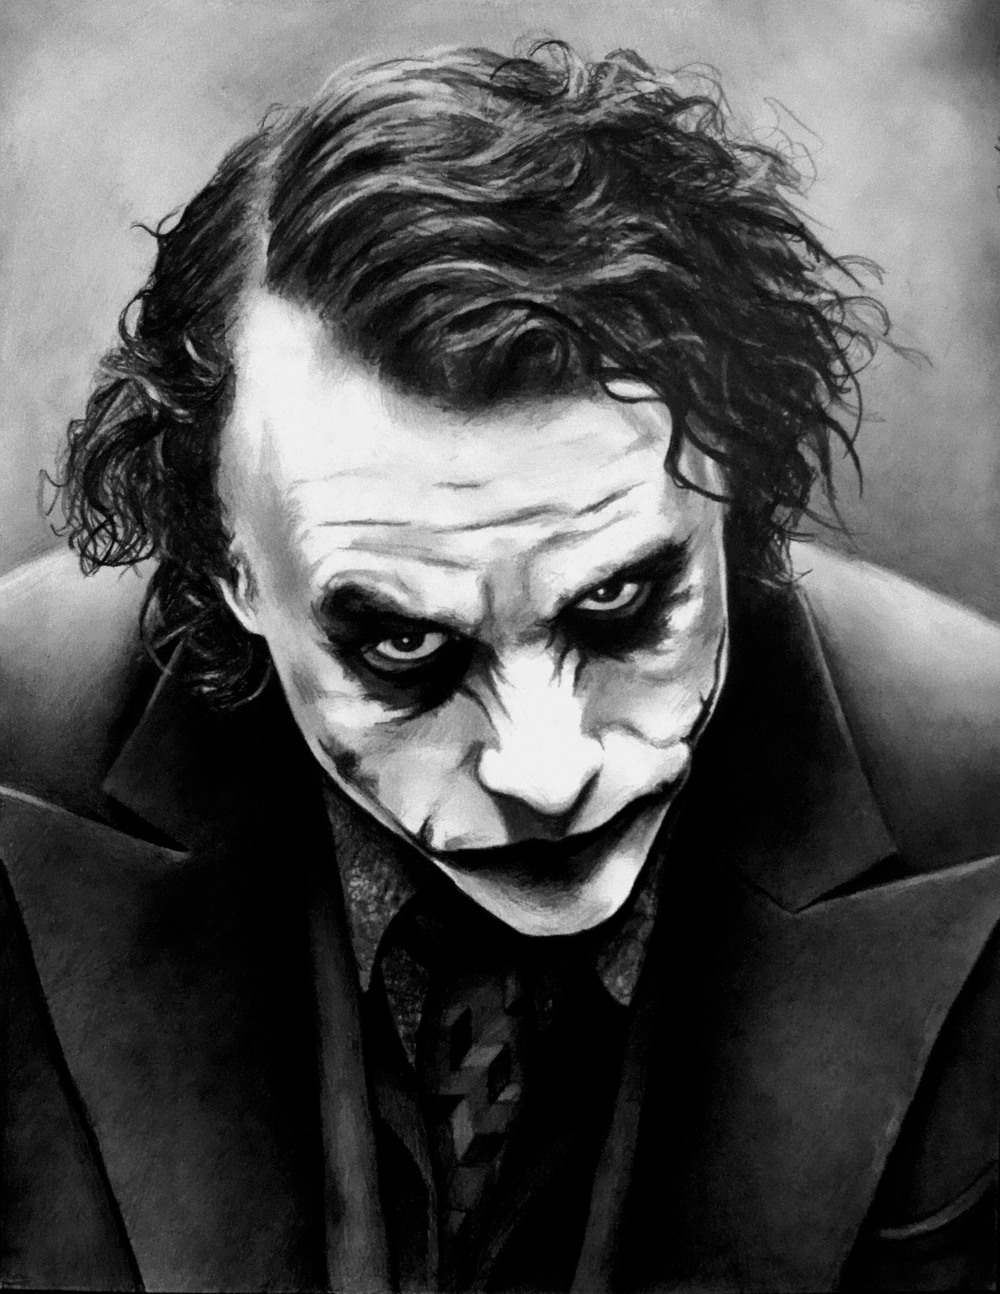 Heath Ledger Joker Sketch at Explore collection of